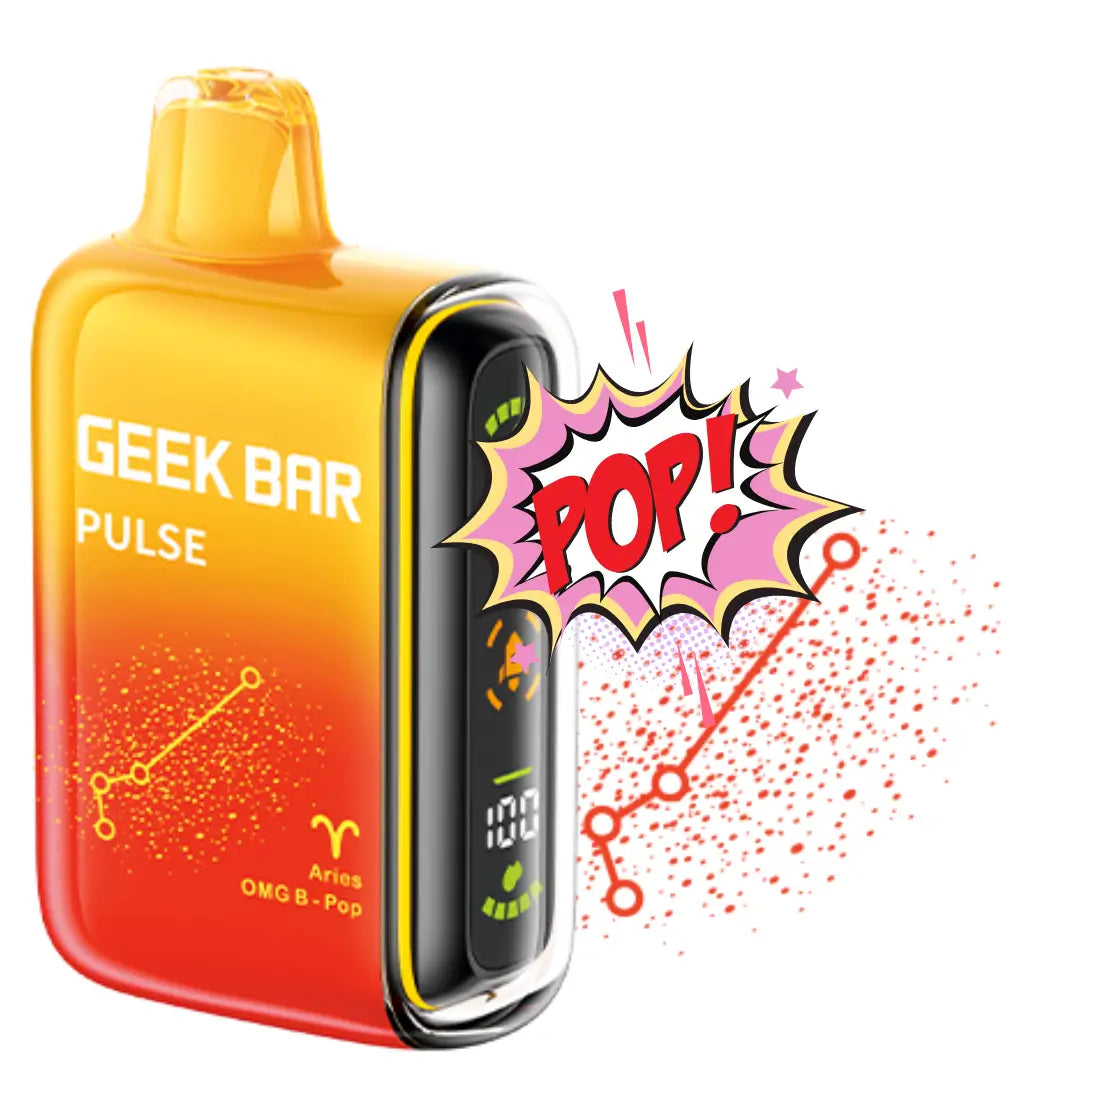 Geek Bar Pulse OMG B Pop